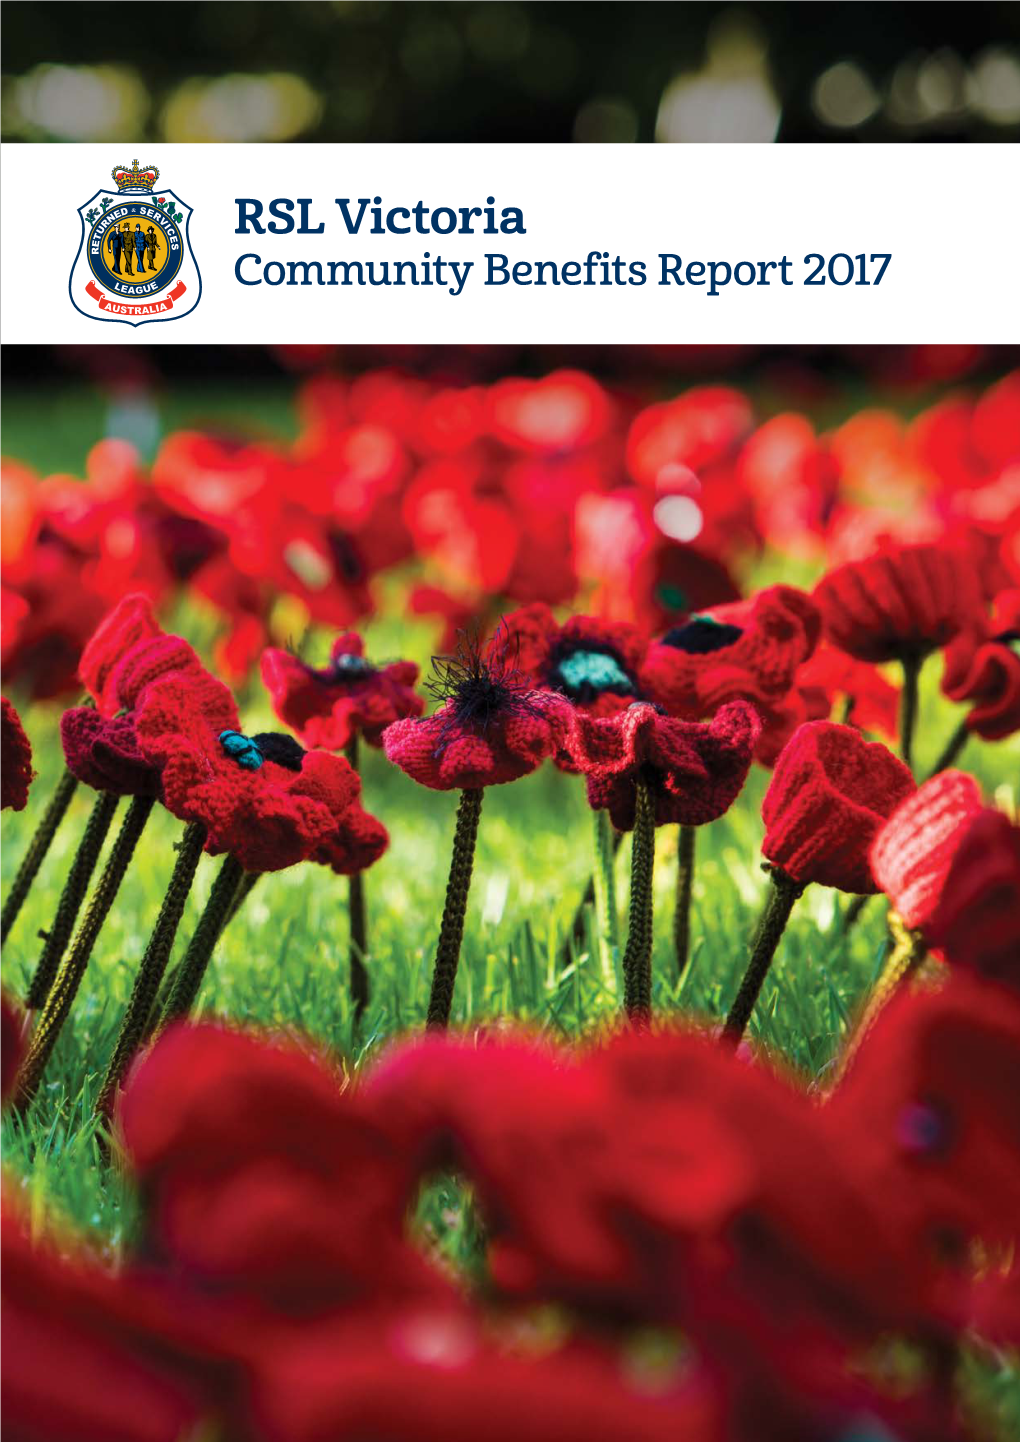 Community Benefits Report 2017 Introduction